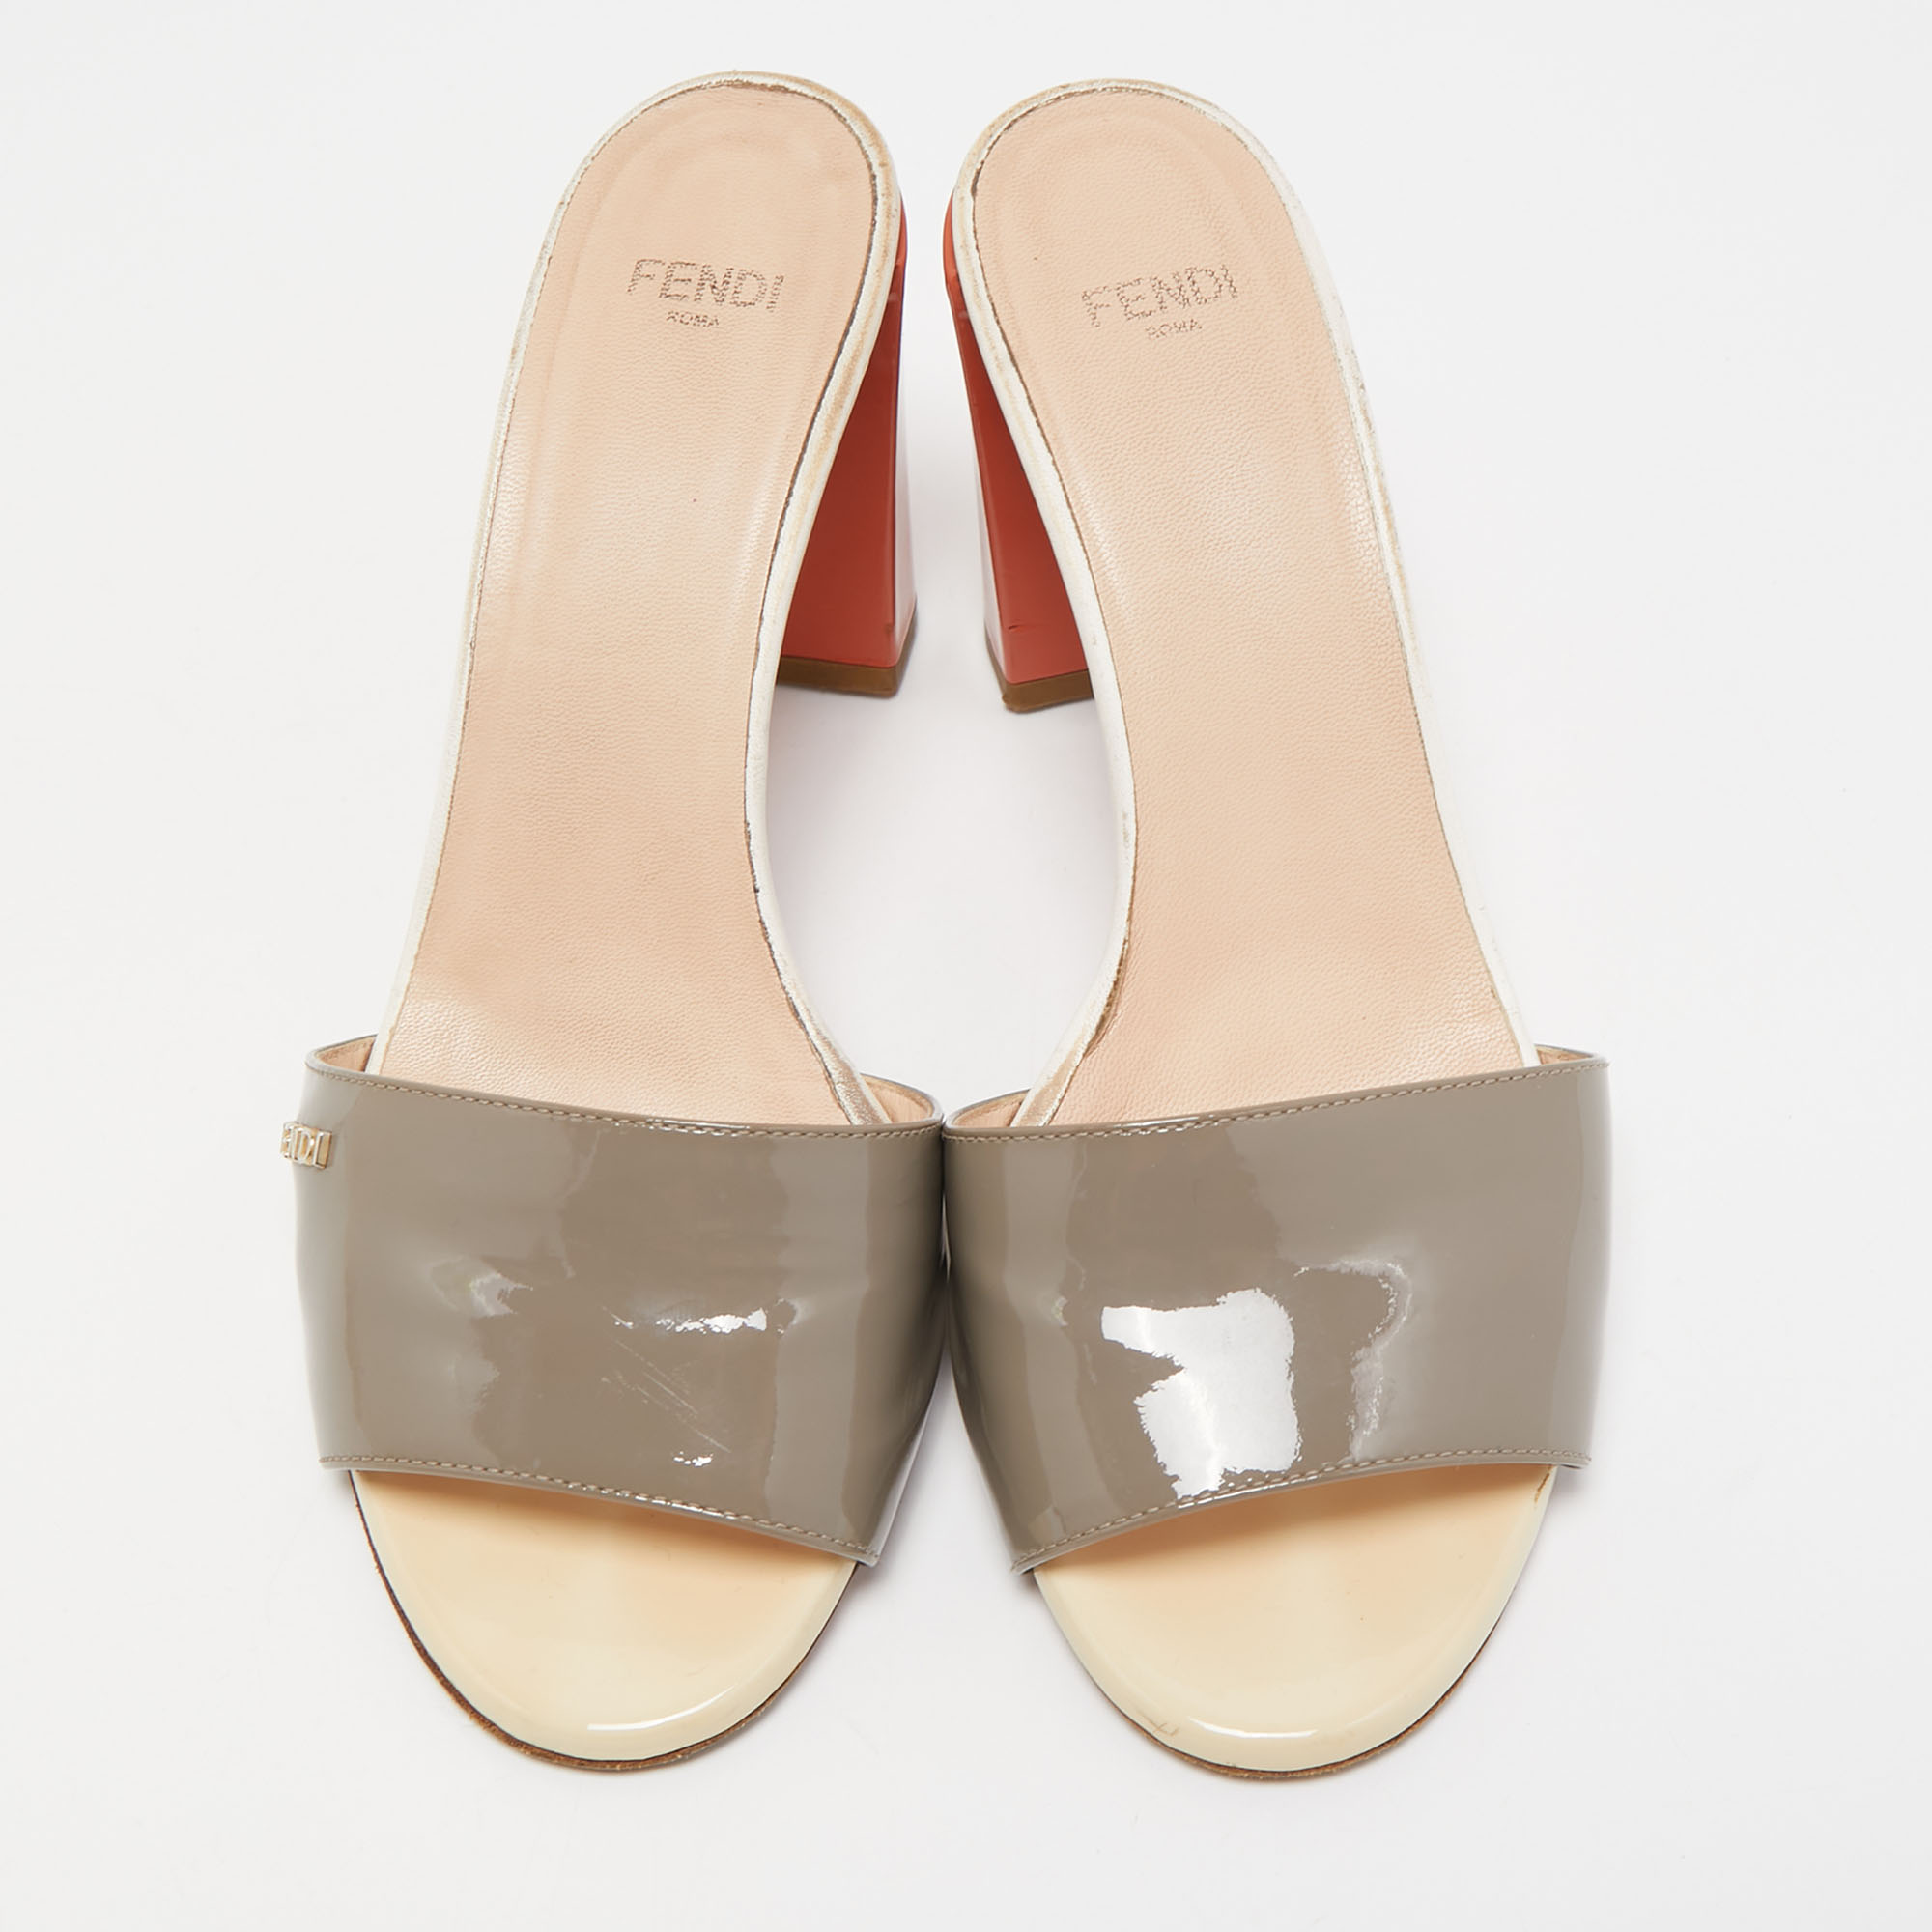 Fendi Tri Color Patent Leather Slide Sandals Size 37.5